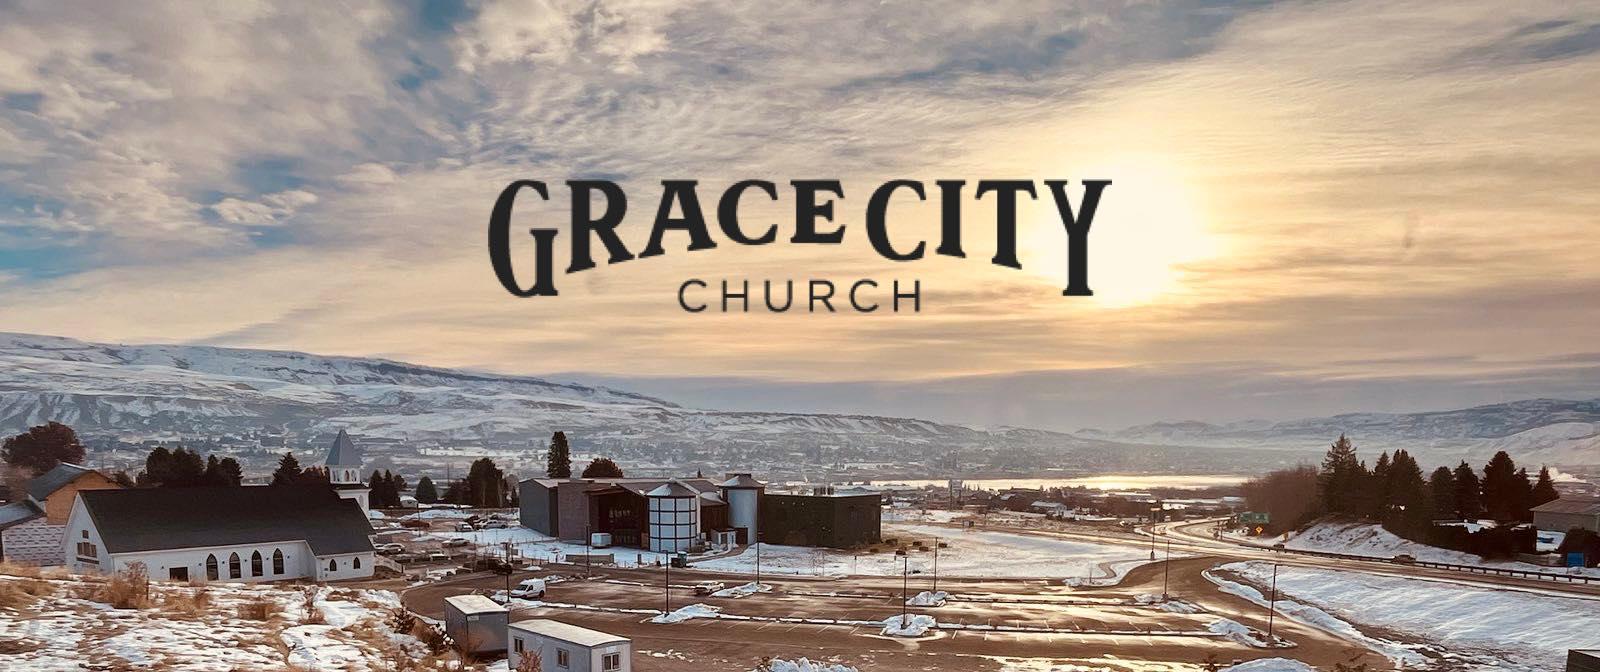 Grace City Church overlooking the Wenatchee Valley